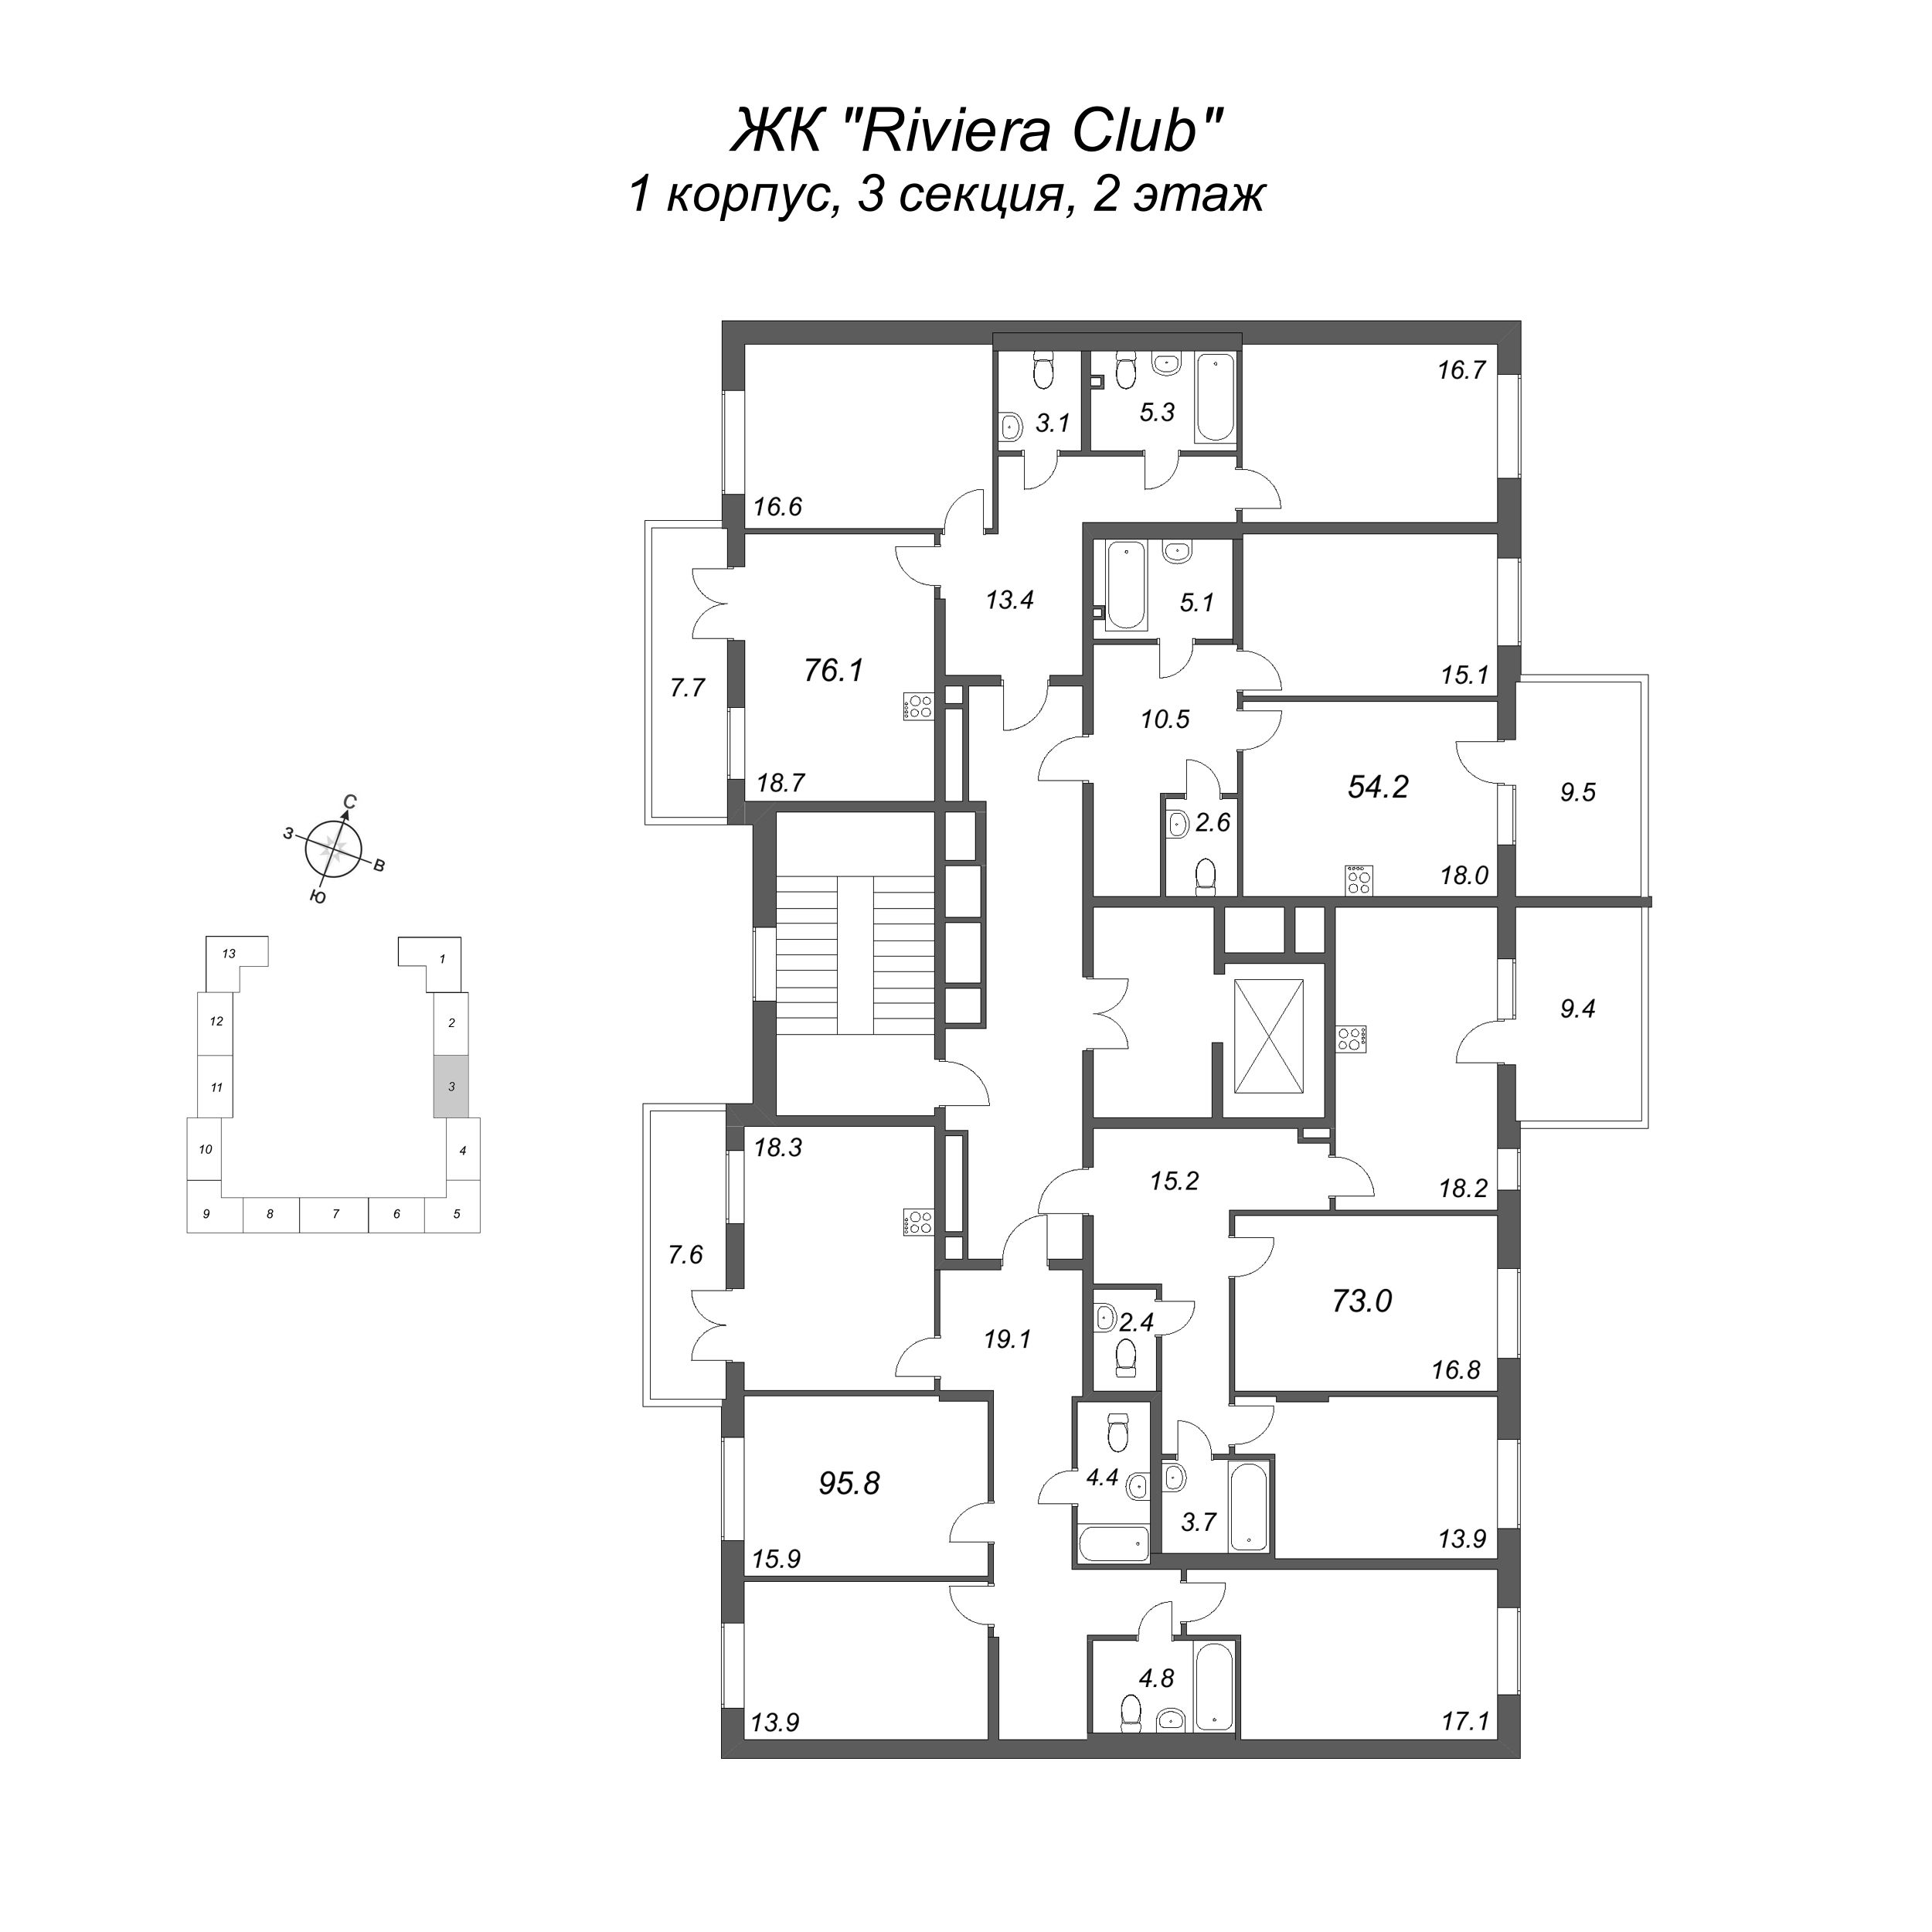 3-комнатная (Евро) квартира, 73 м² в ЖК "Riviera Club" - планировка этажа